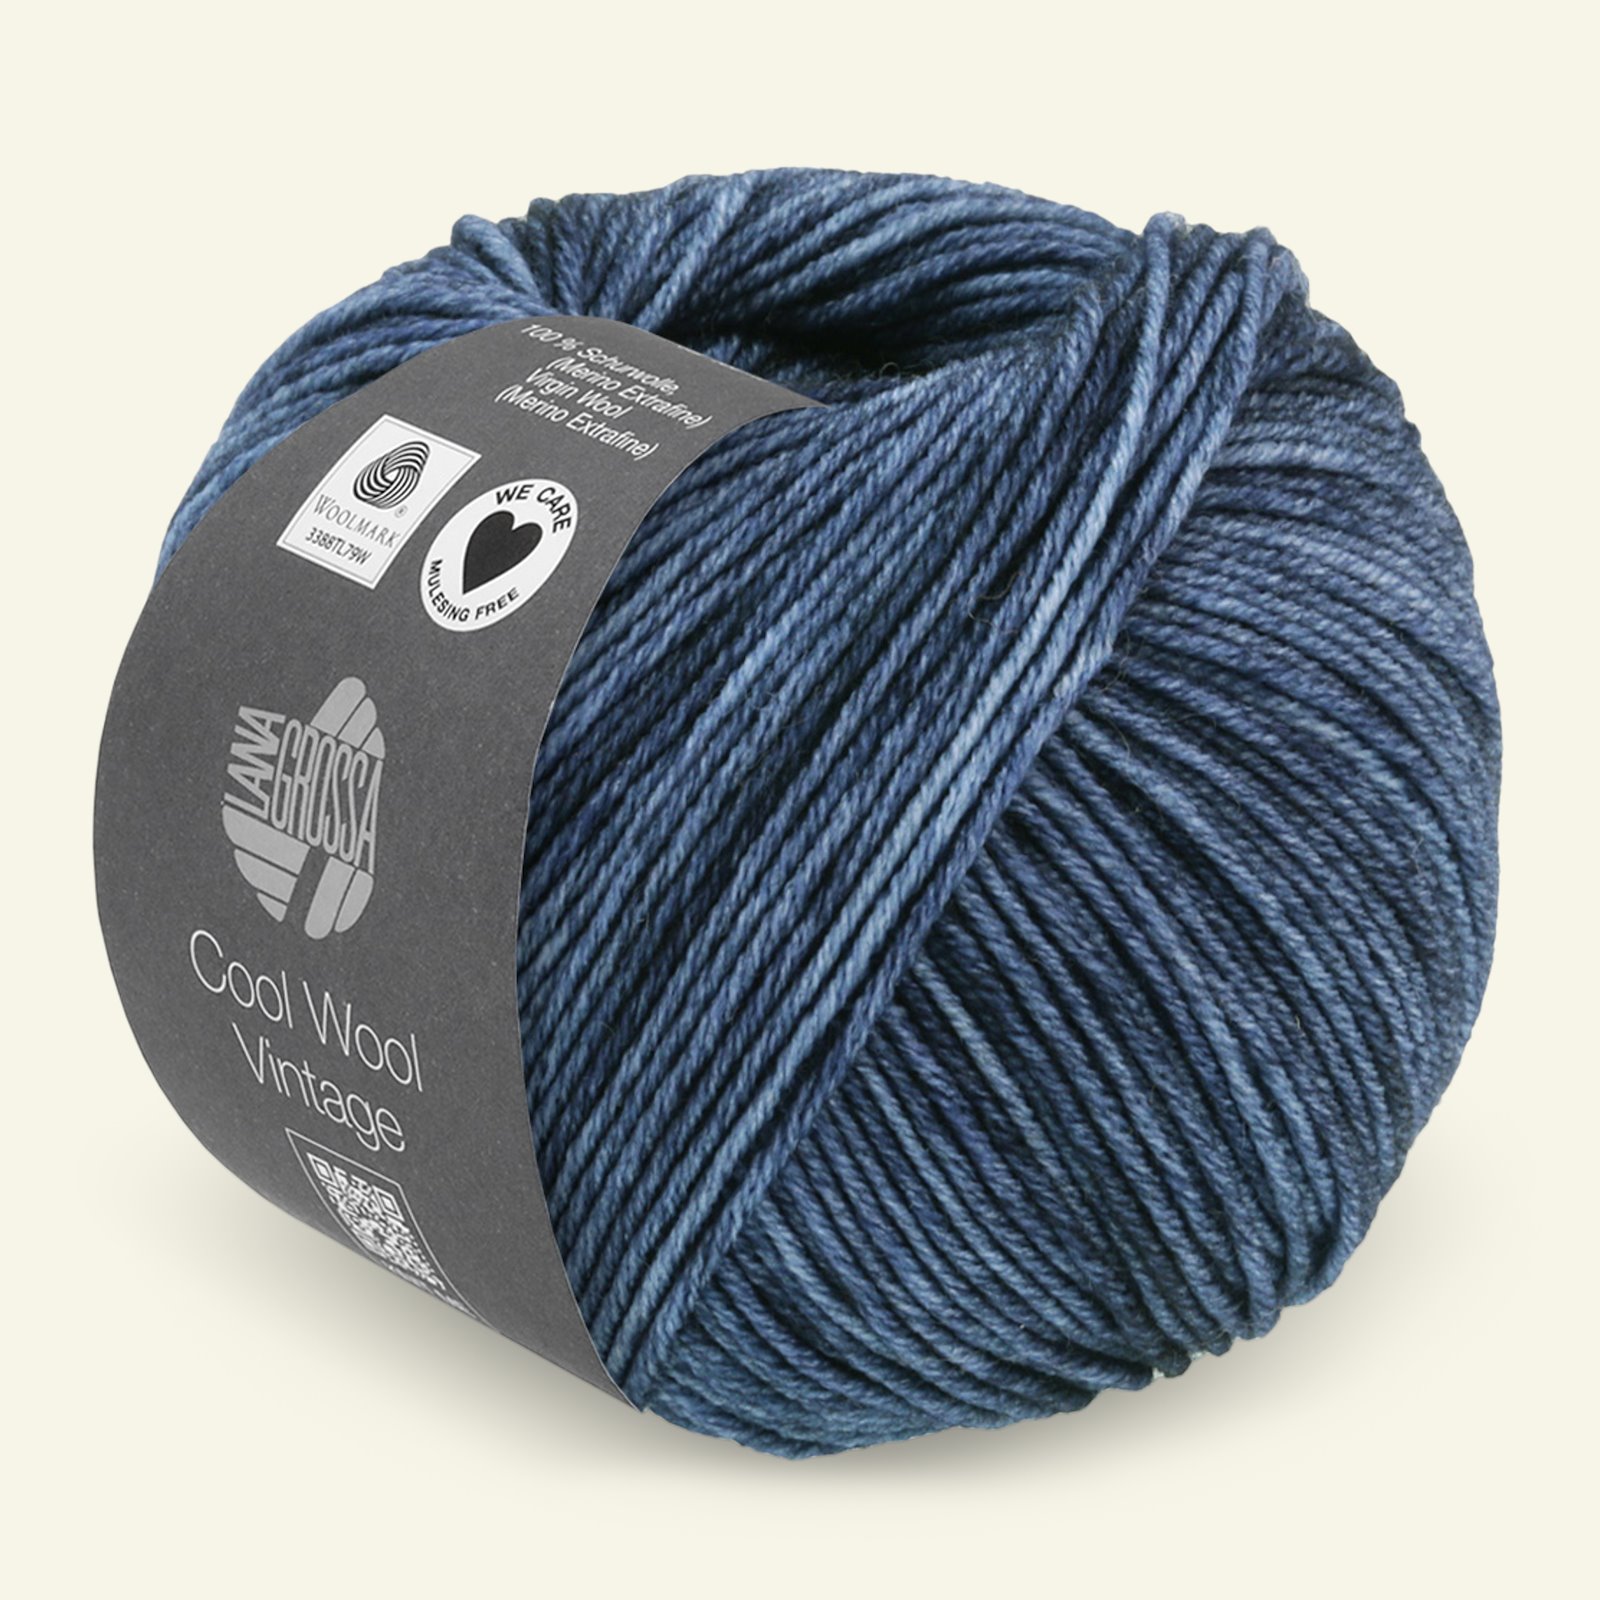 Lana Grossa, extrafine merino wool yarn "Cool Wool Vintage", dark blue 90001080_pack